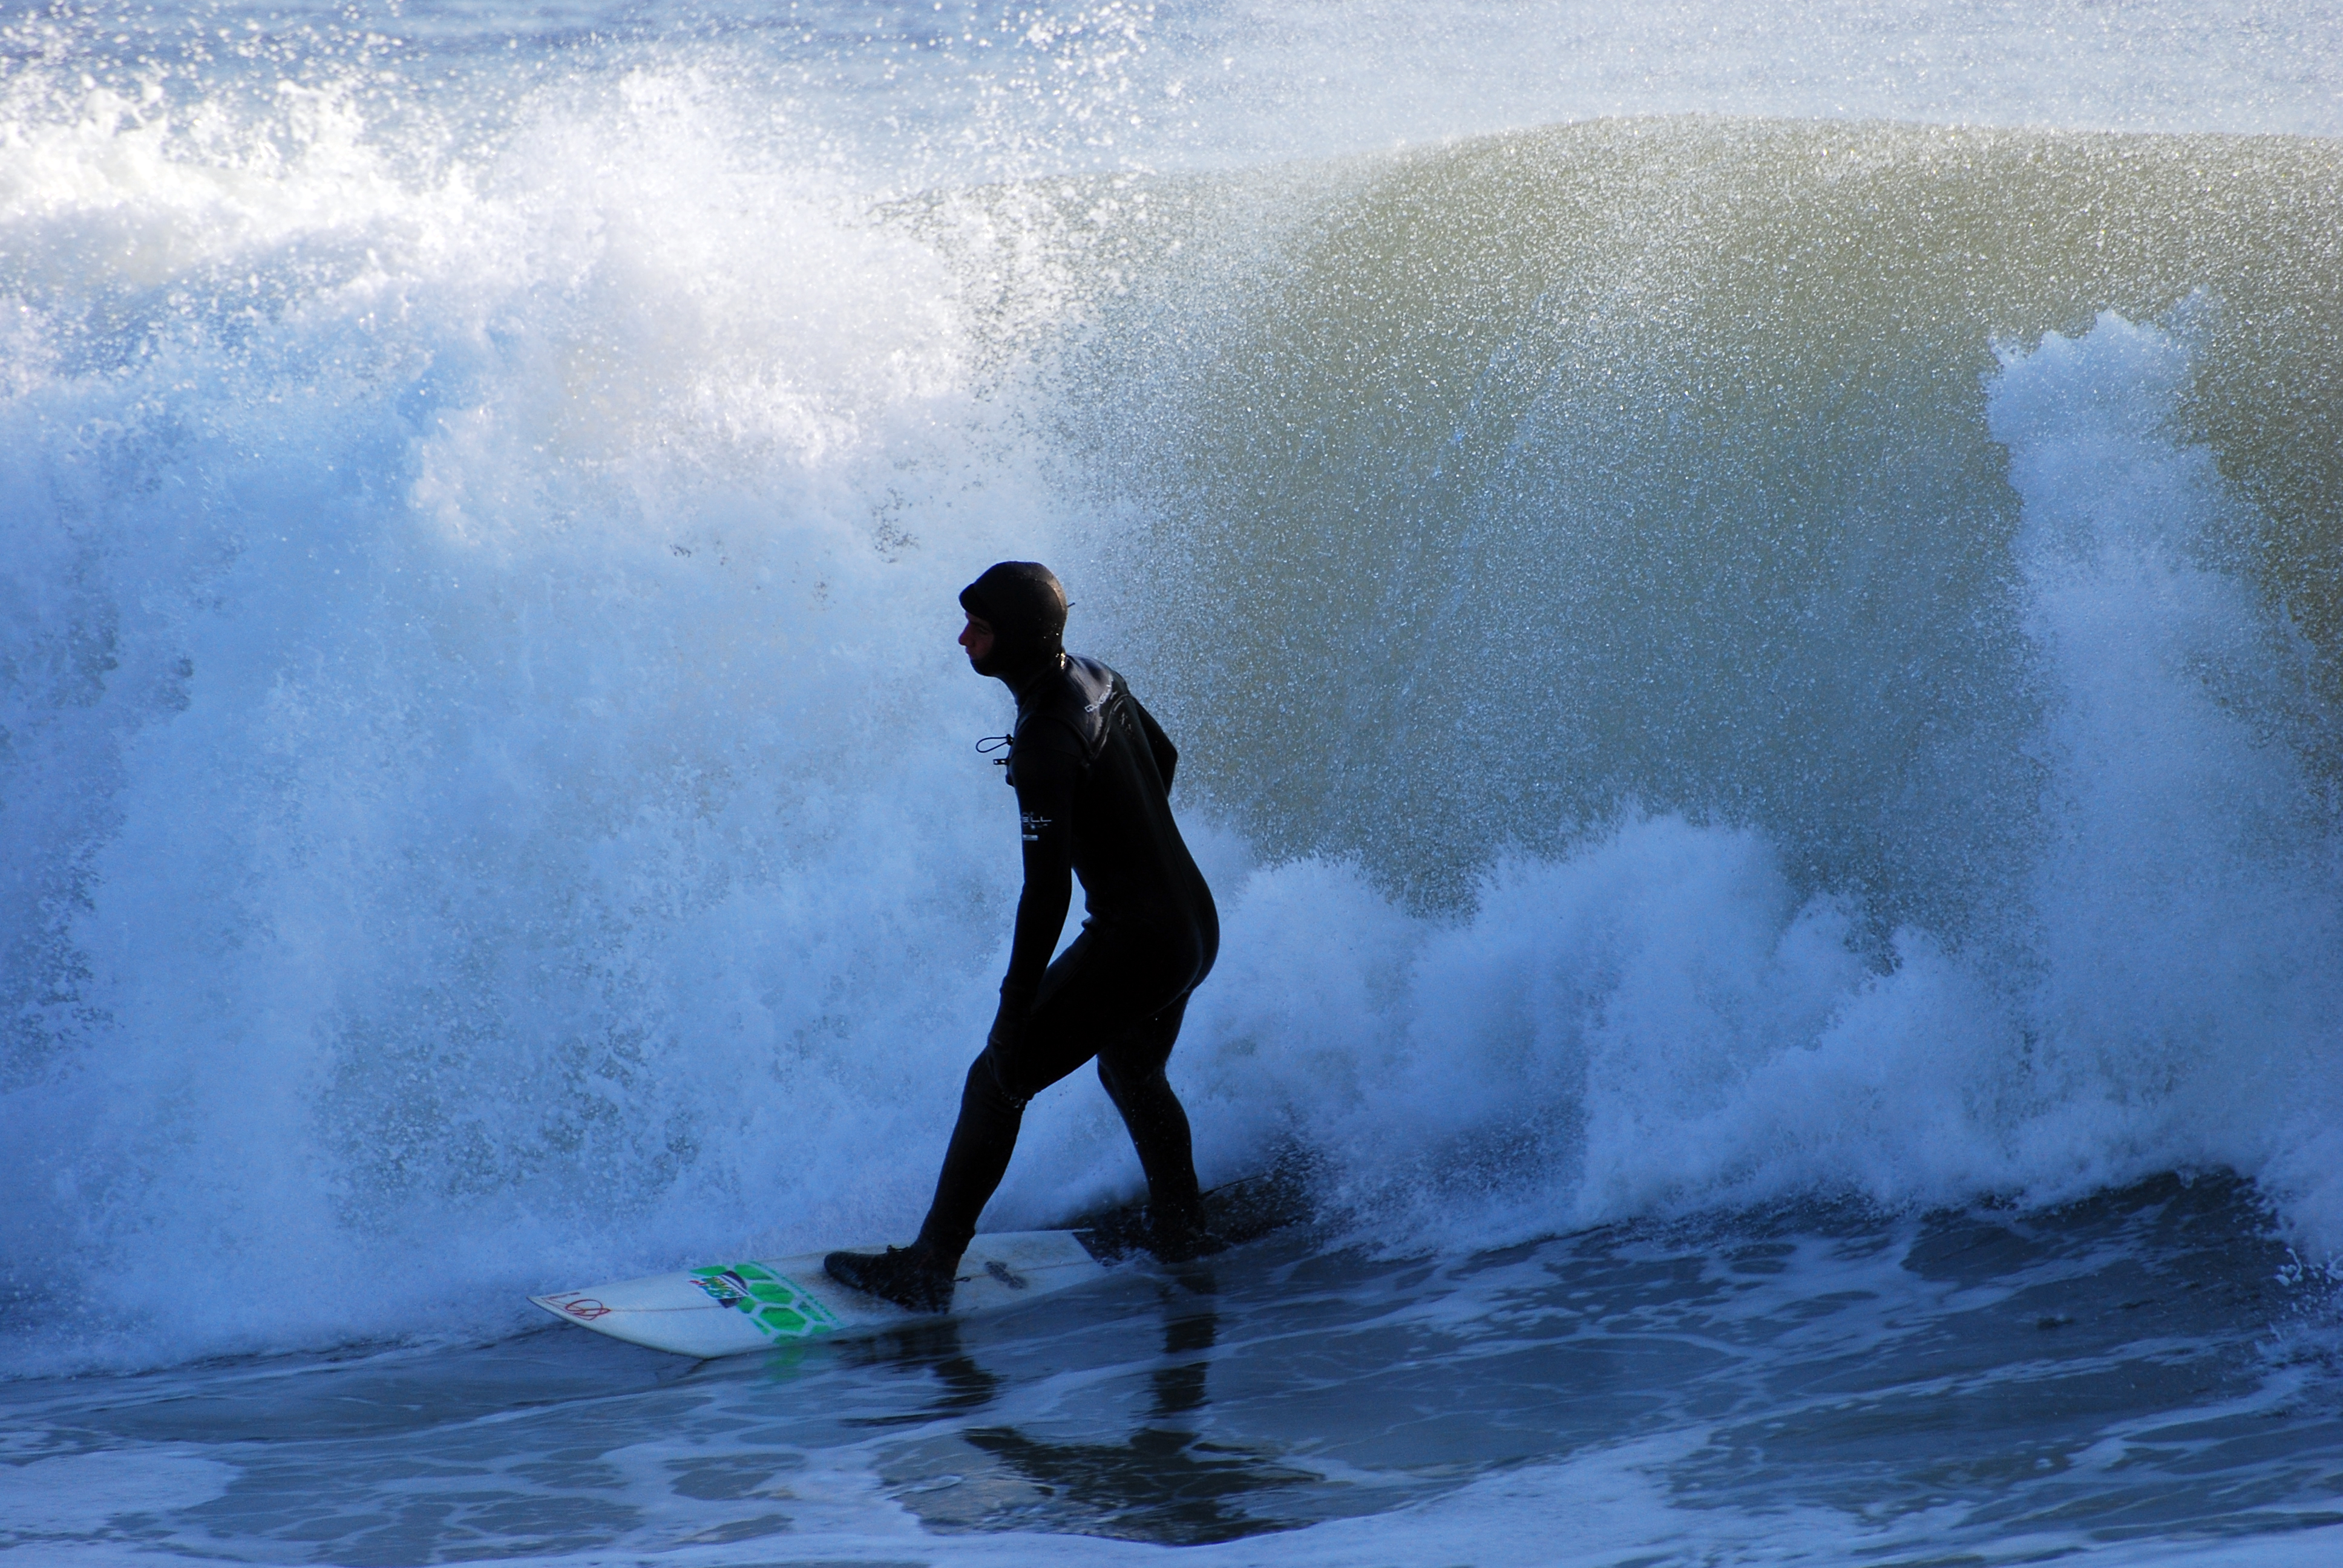 Surfing in New Jersey. (Photo: Todd Binger/Flickr)